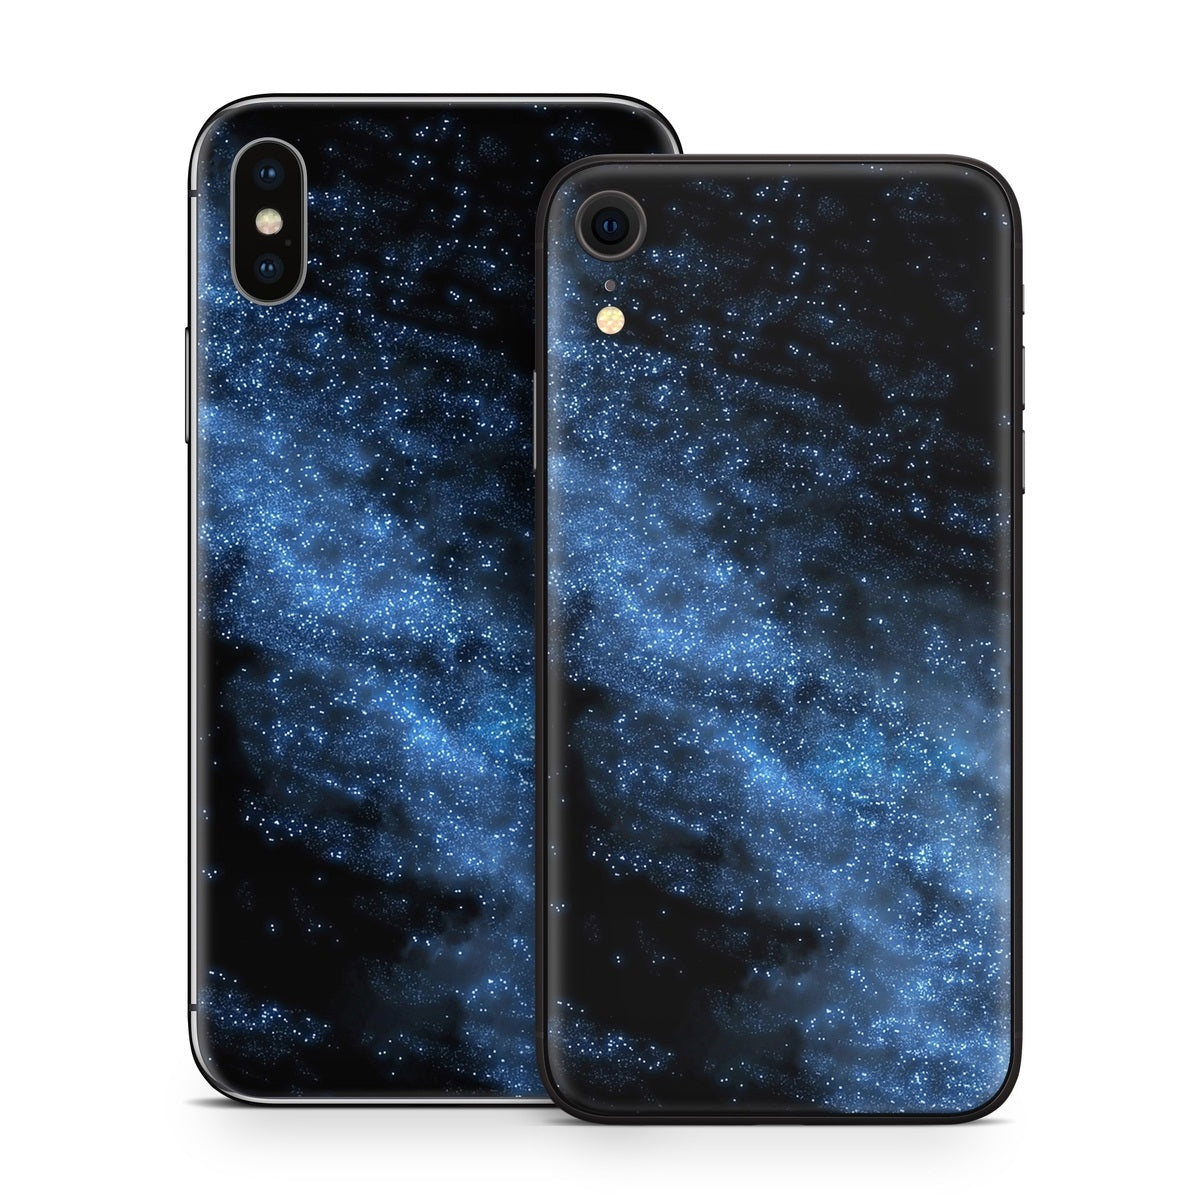 Milky Way - Apple iPhone X Skin